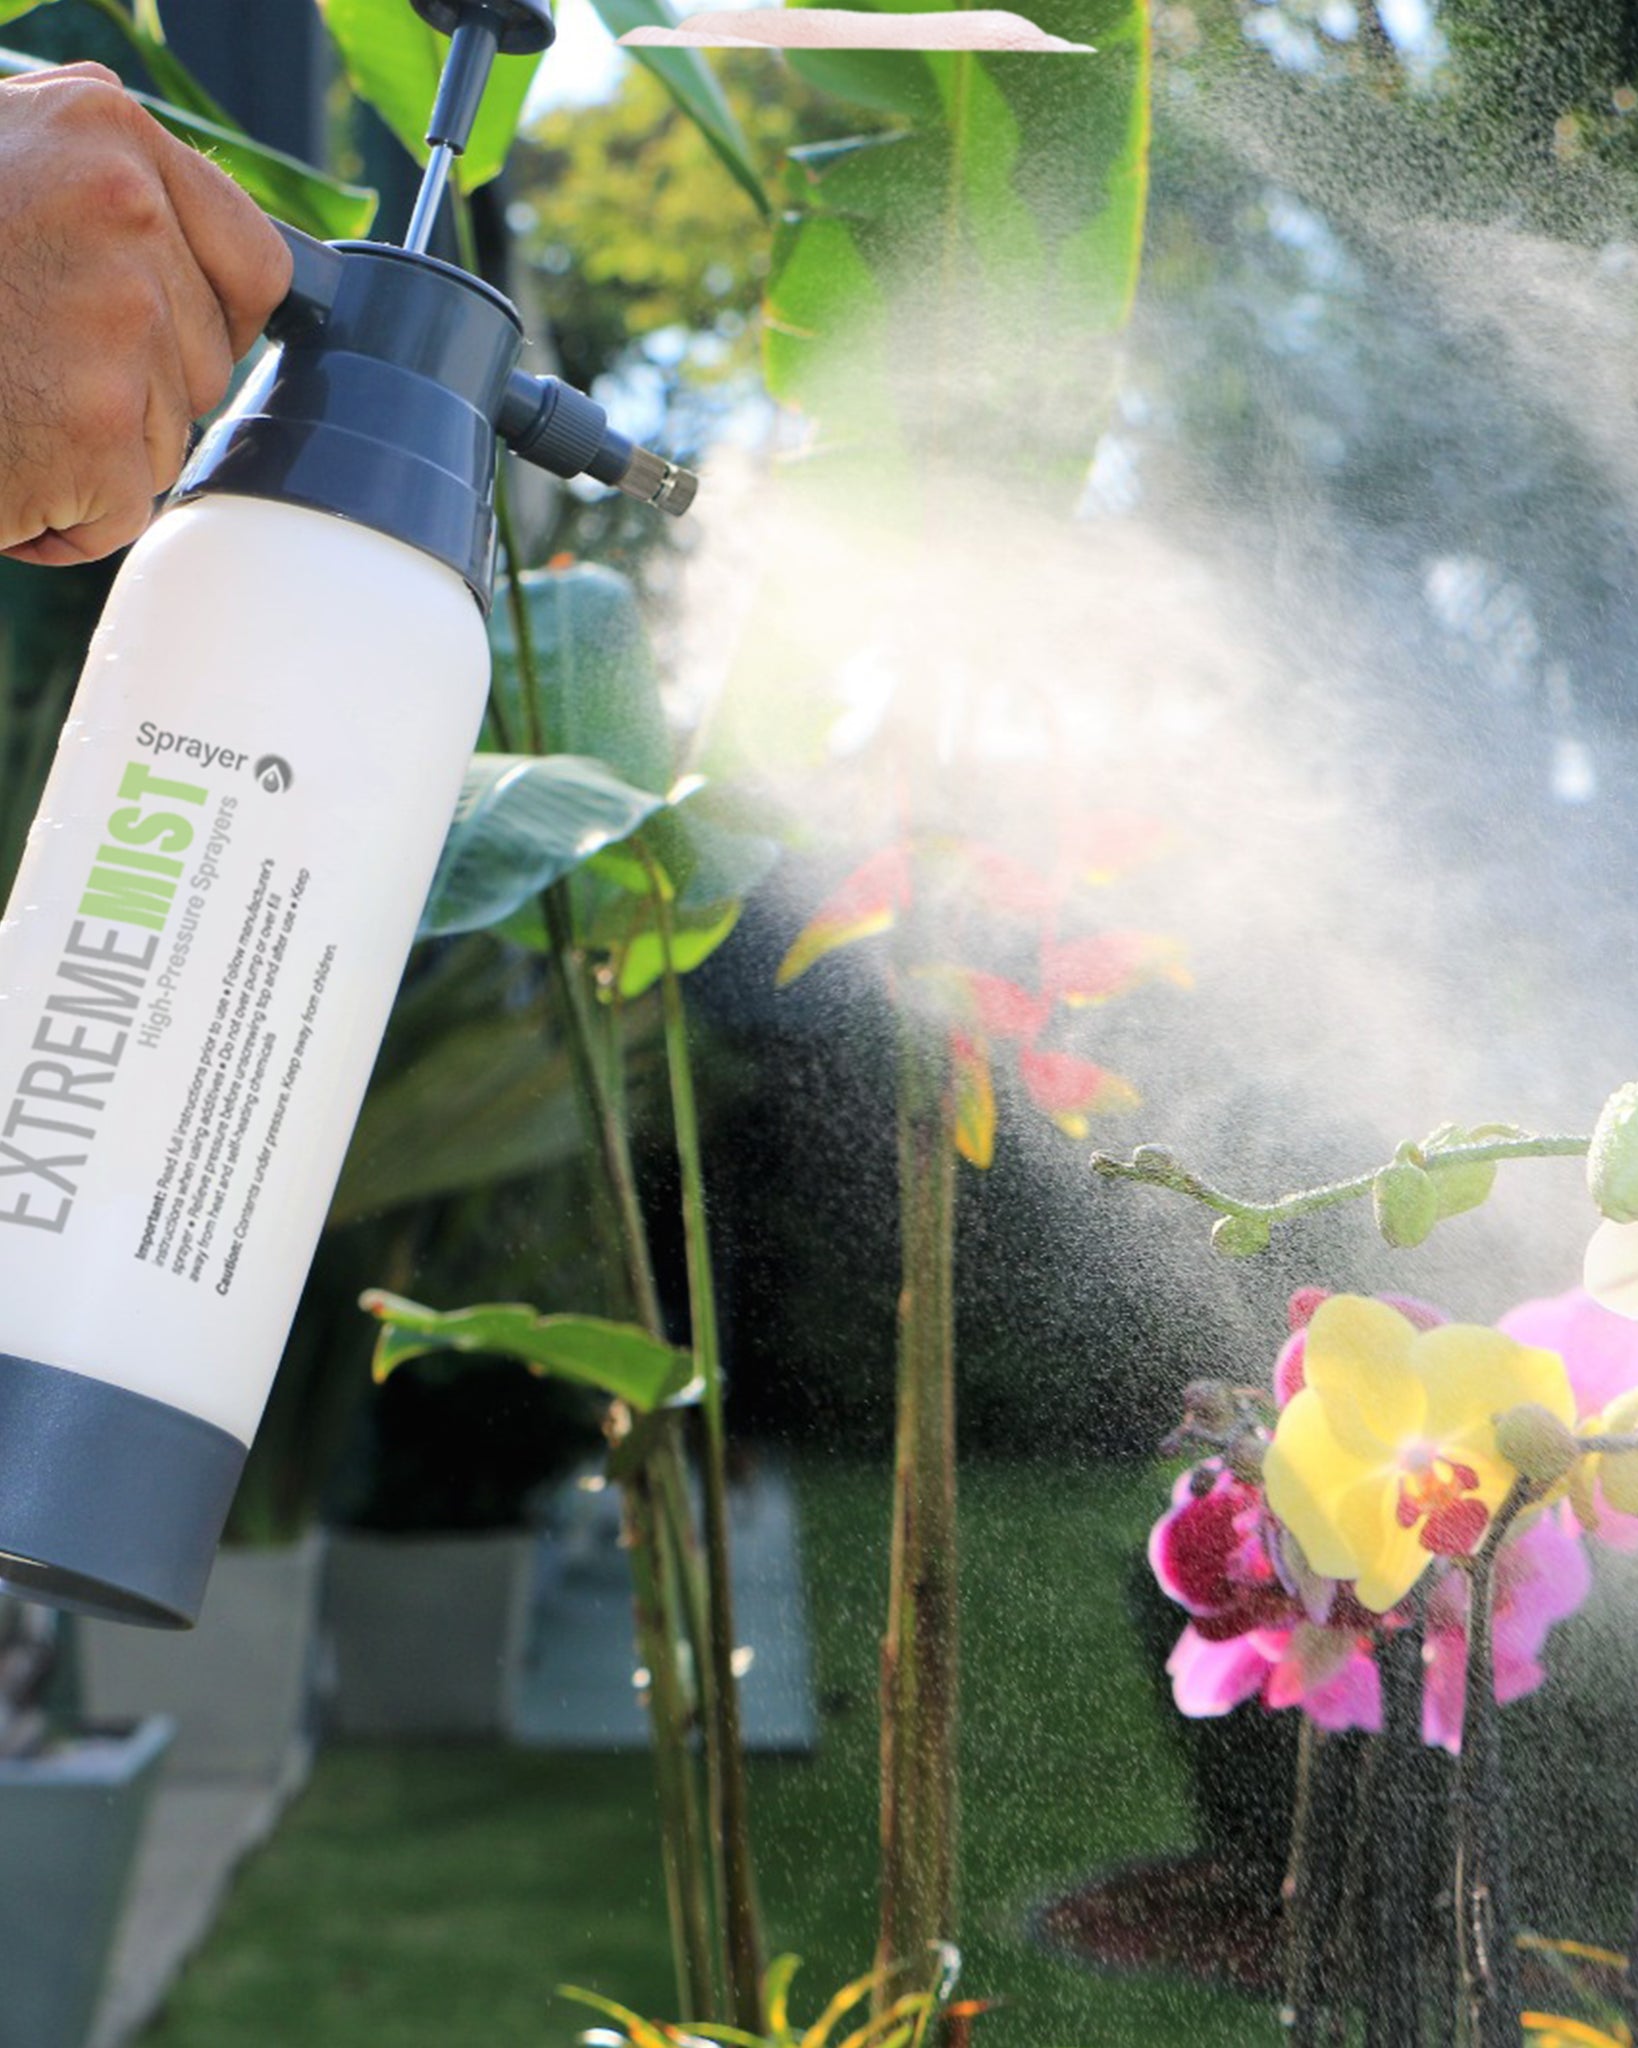 plant mister pump-up sprayer spraying mist at flowers